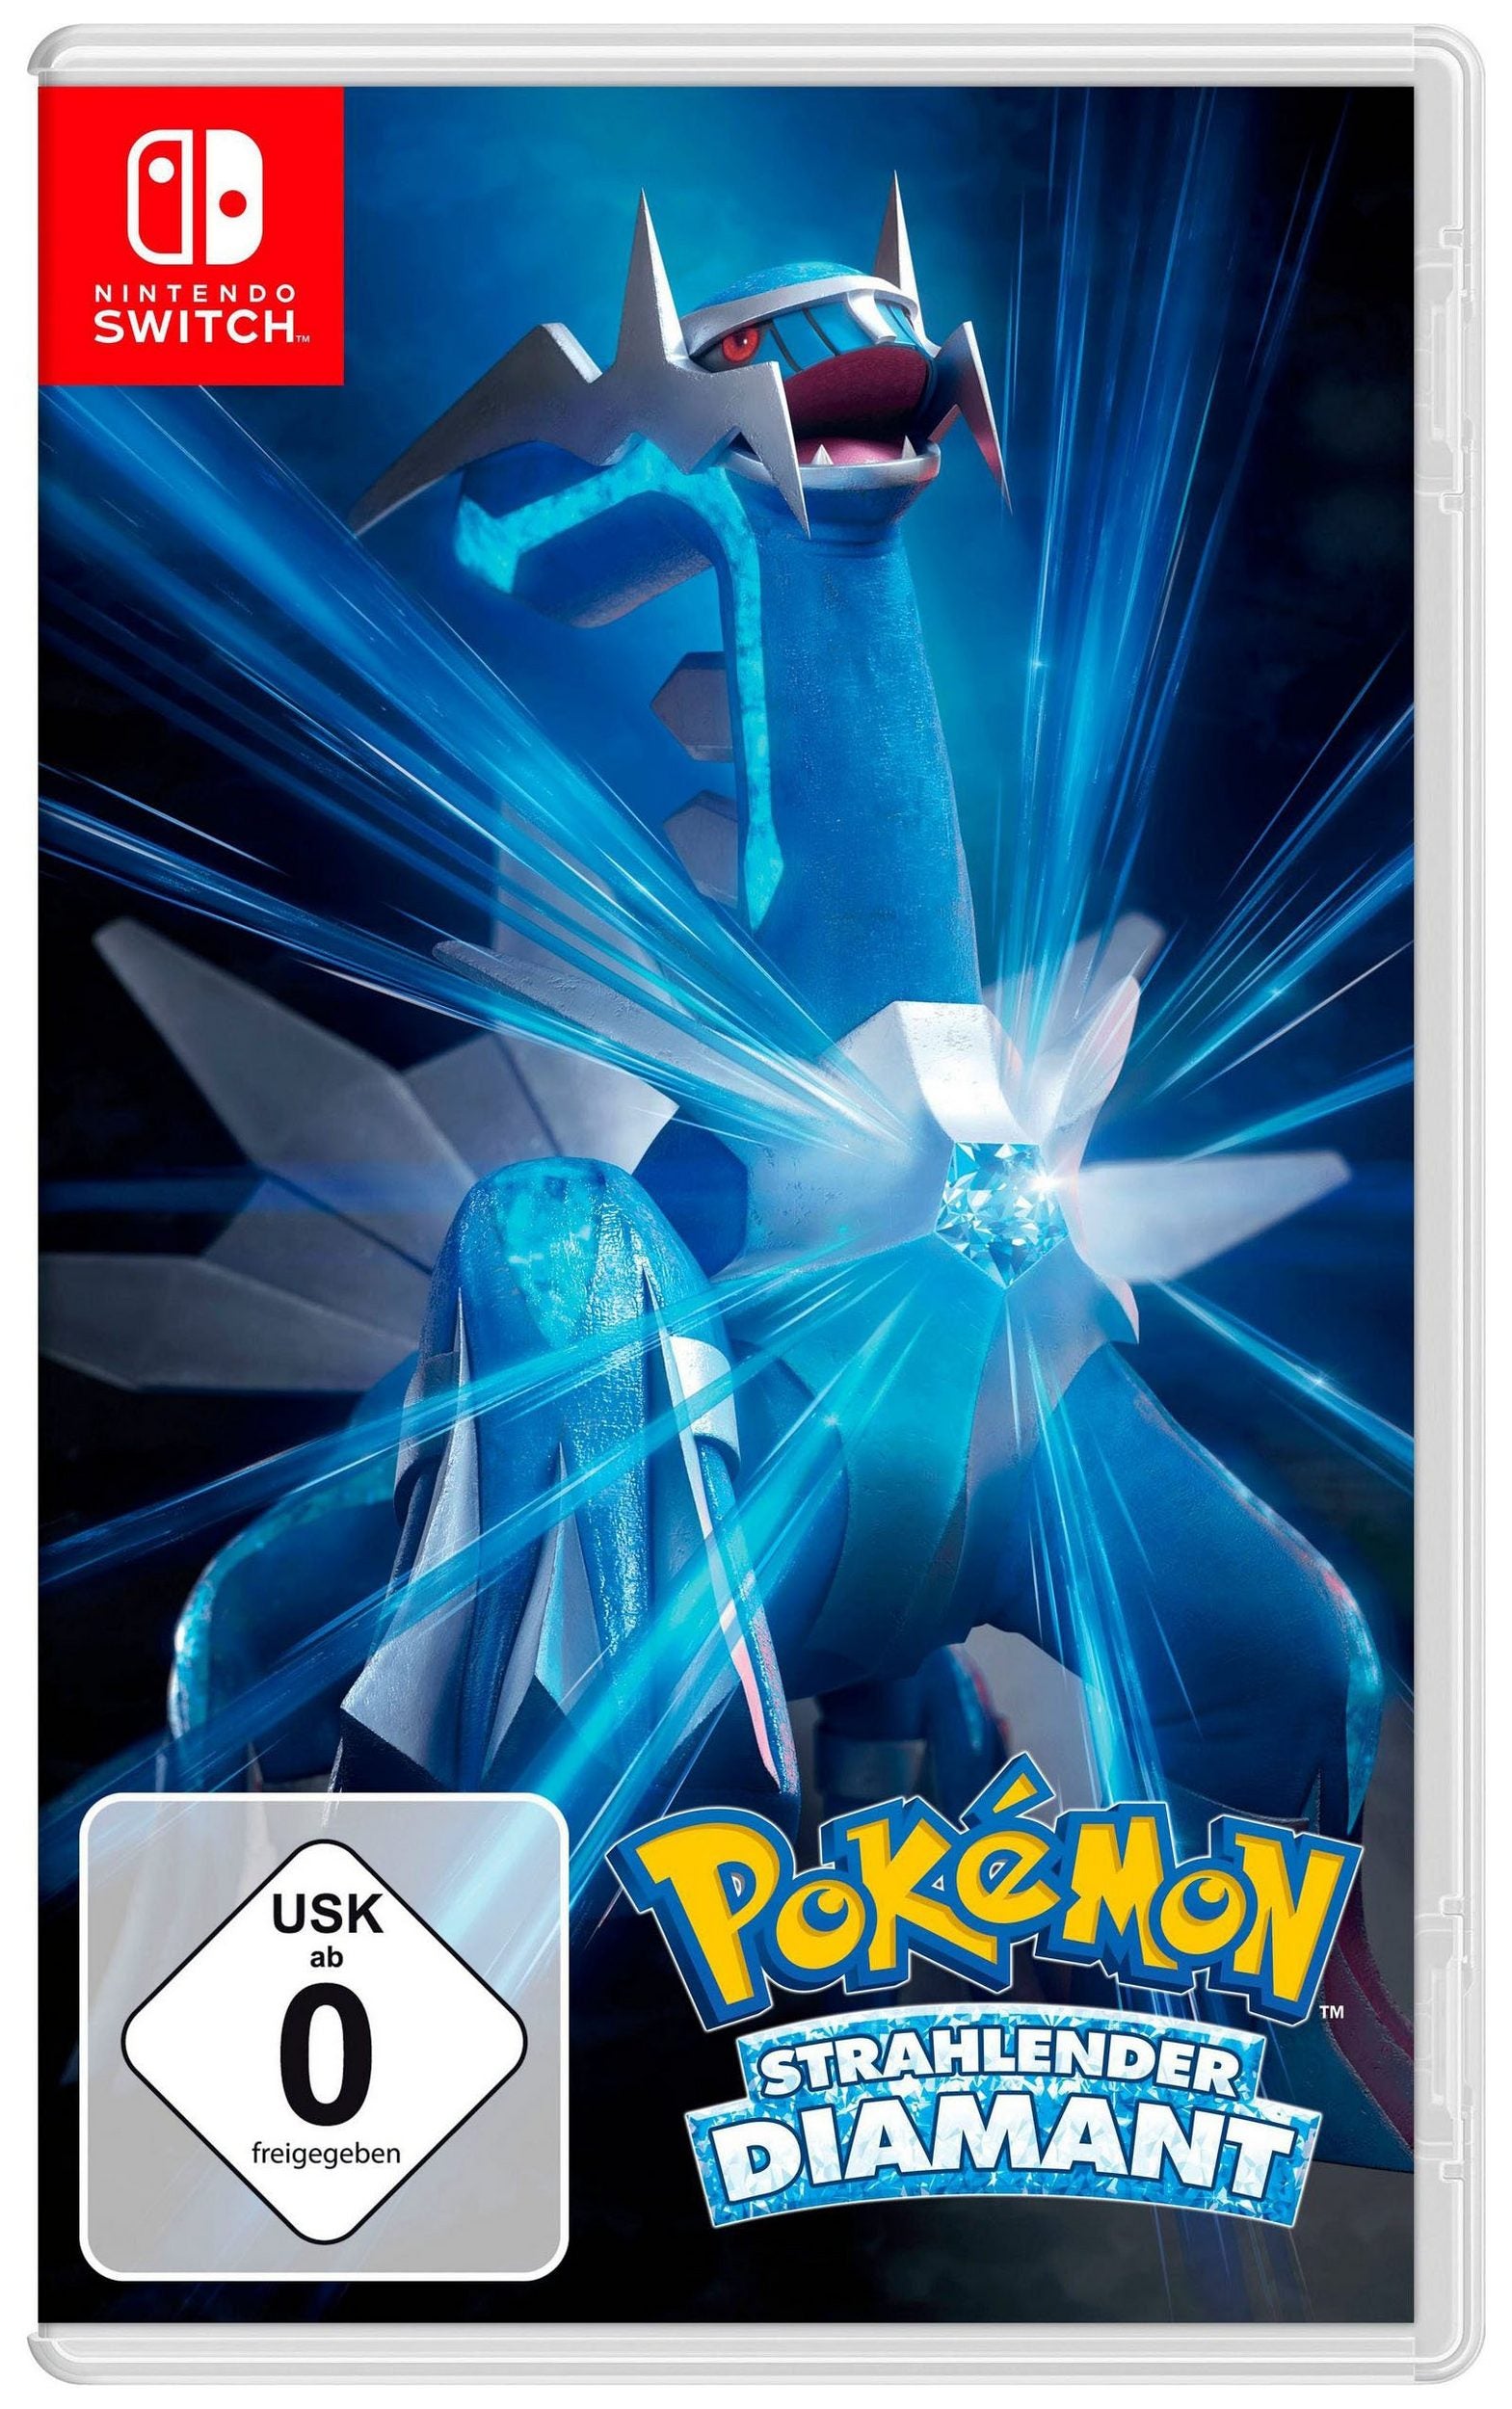 Ultimate Pokémon Blue GBC - All Pokémon (Legal), Max Items, New Save  Battery